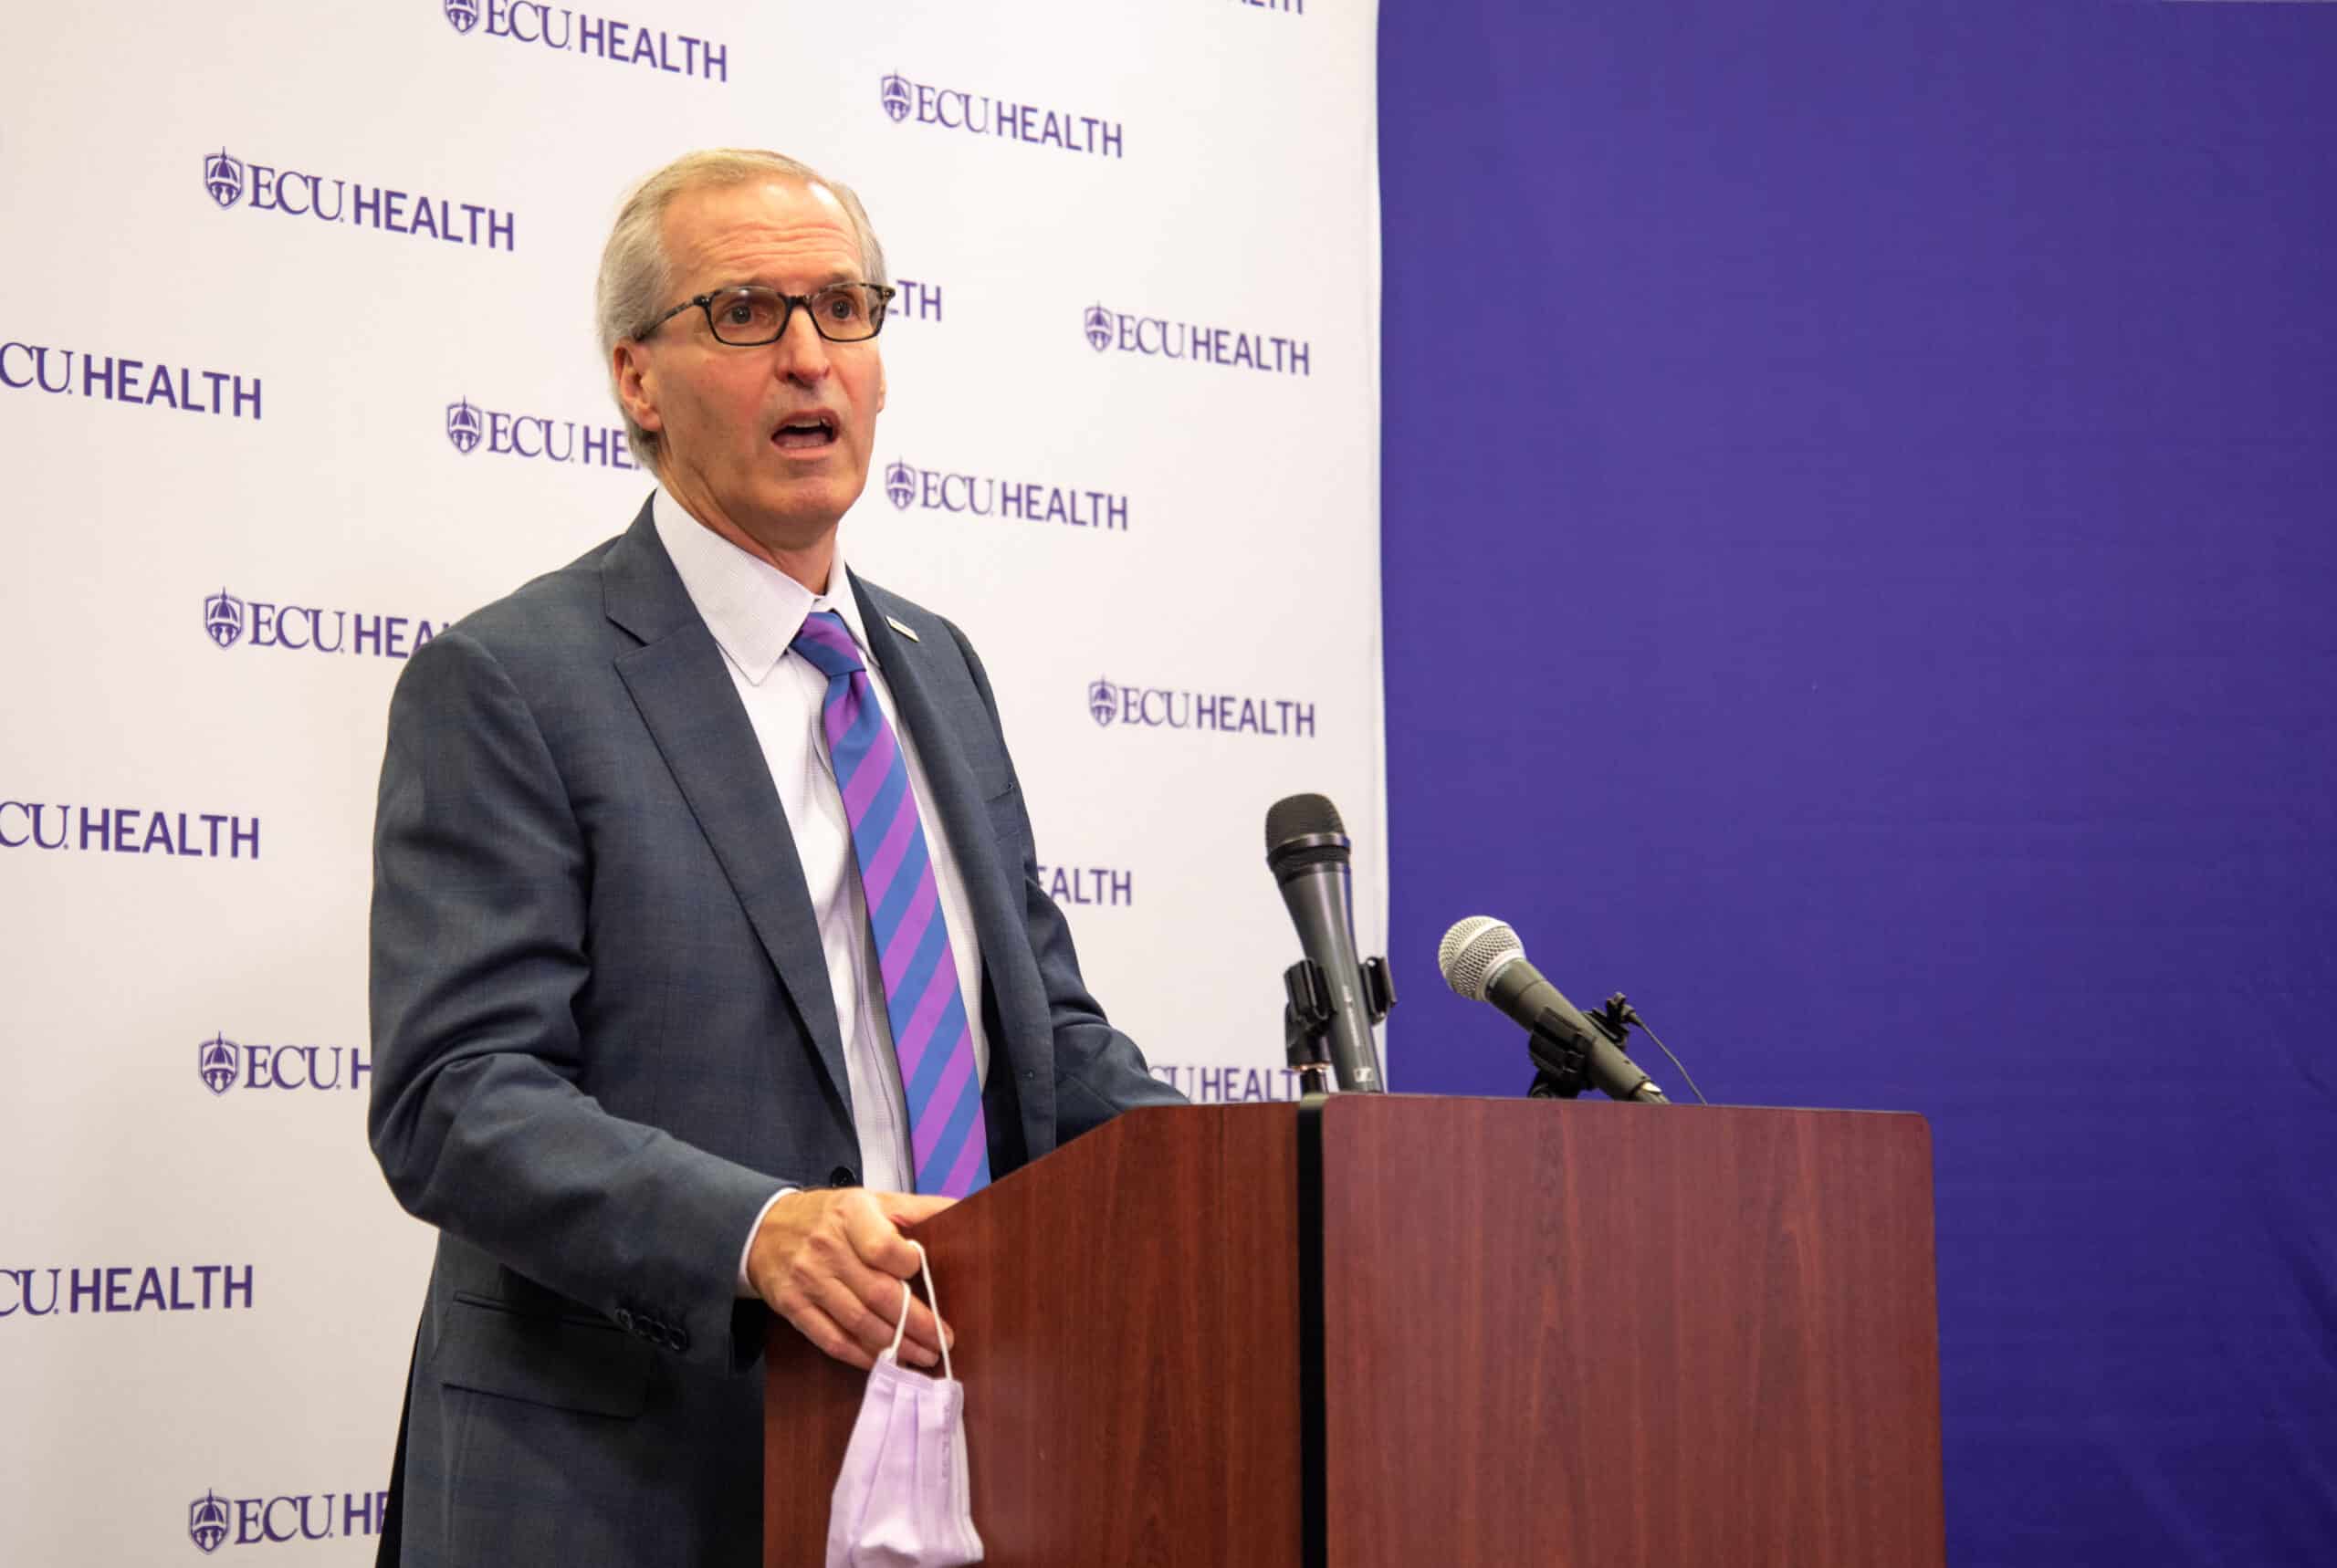 ECU Health CEO Dr. Michael Waldrum speaks during a press conference unveiling ECU Health's logo.